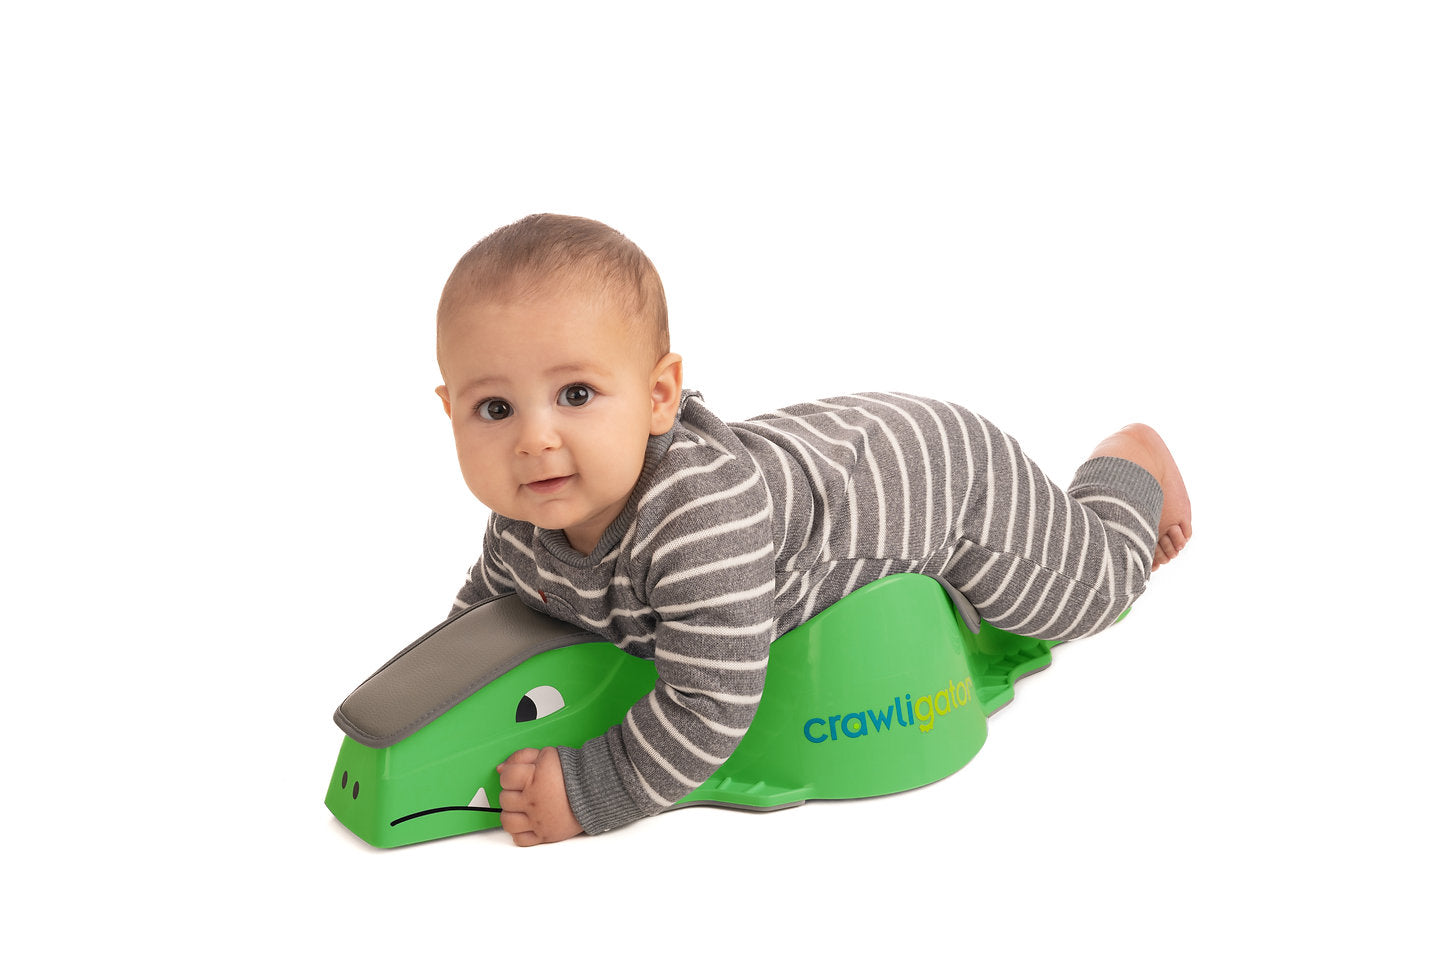 Crawligator - The Best Baby Tummy Time Toy